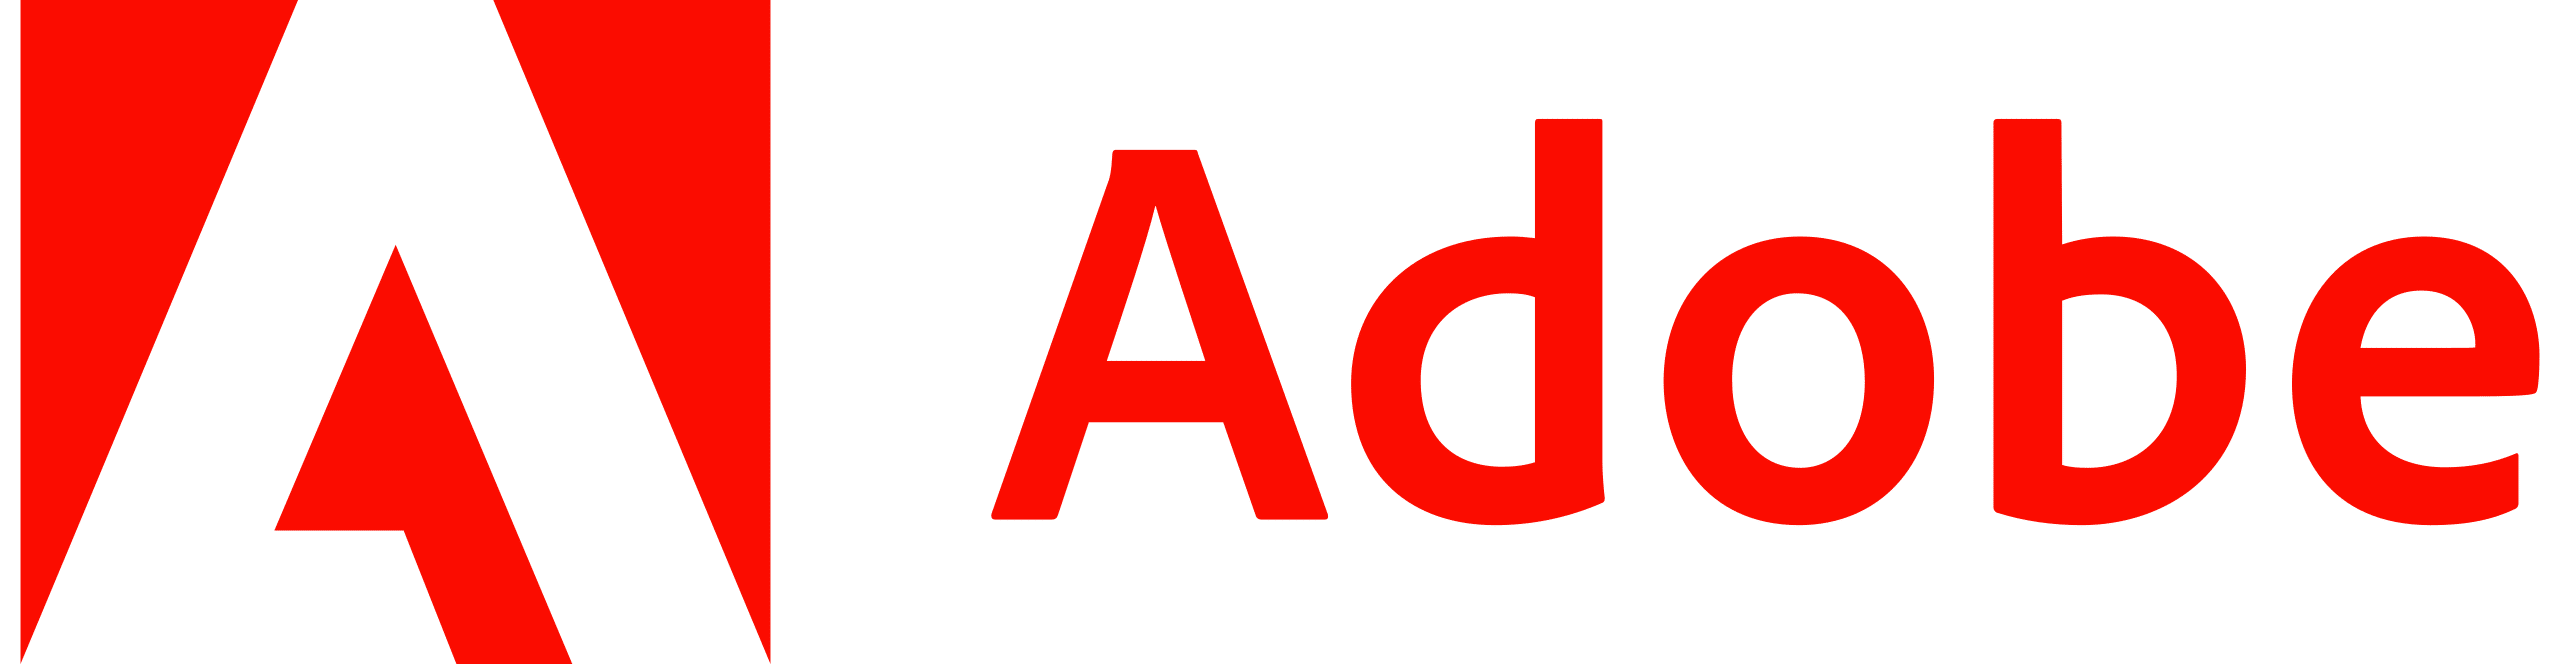 Adobe_Corporate_logo